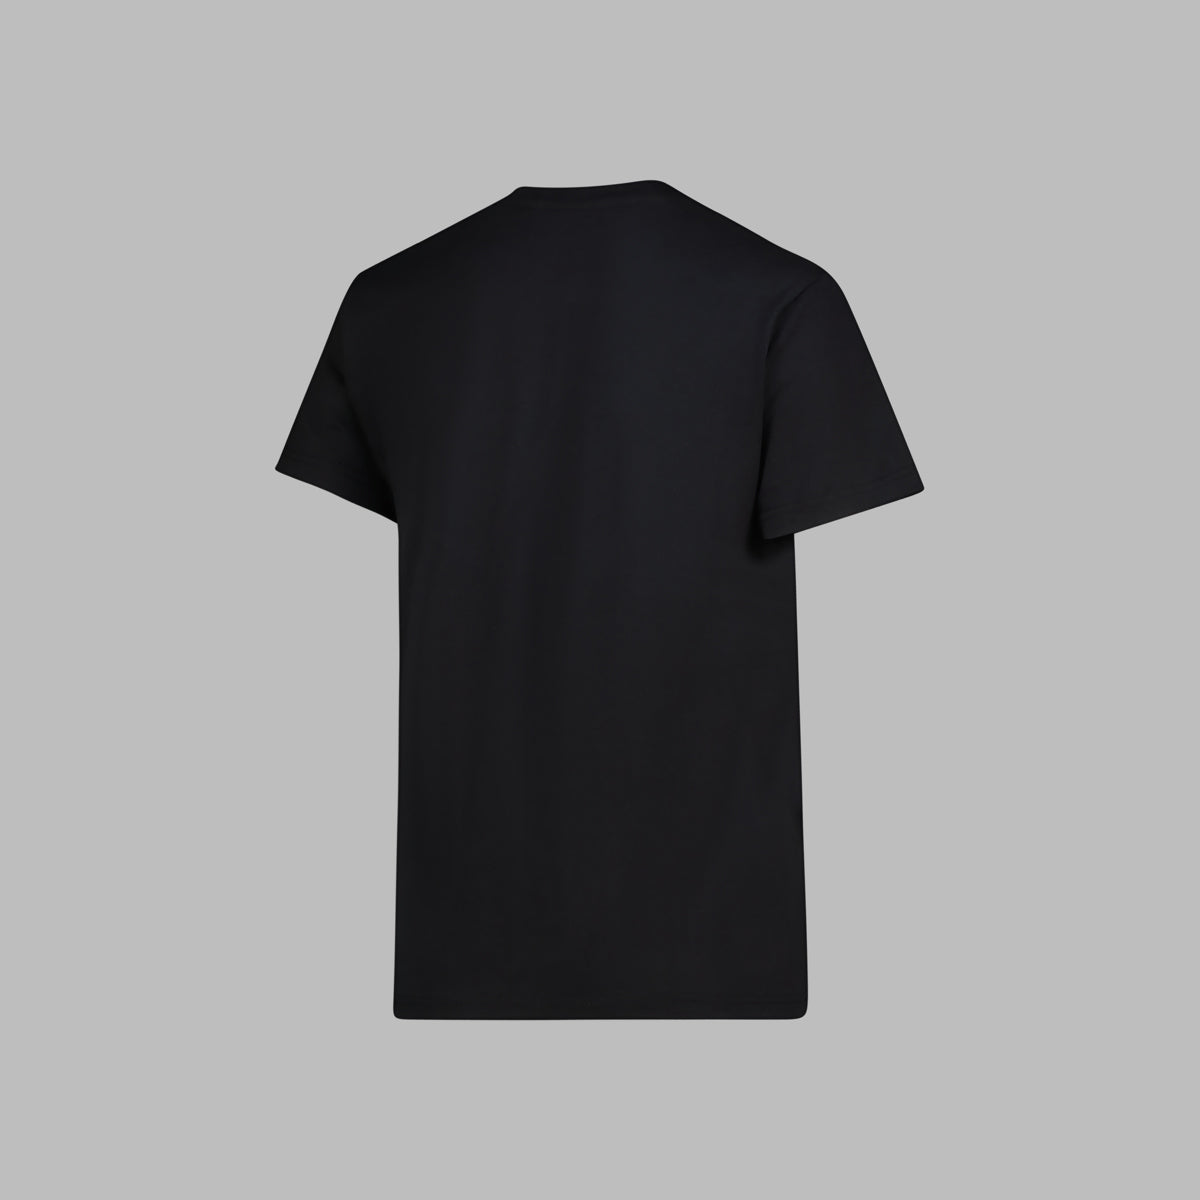 TSHEPO 1548 Black t-shirt. No print on the back of the t-shirt.